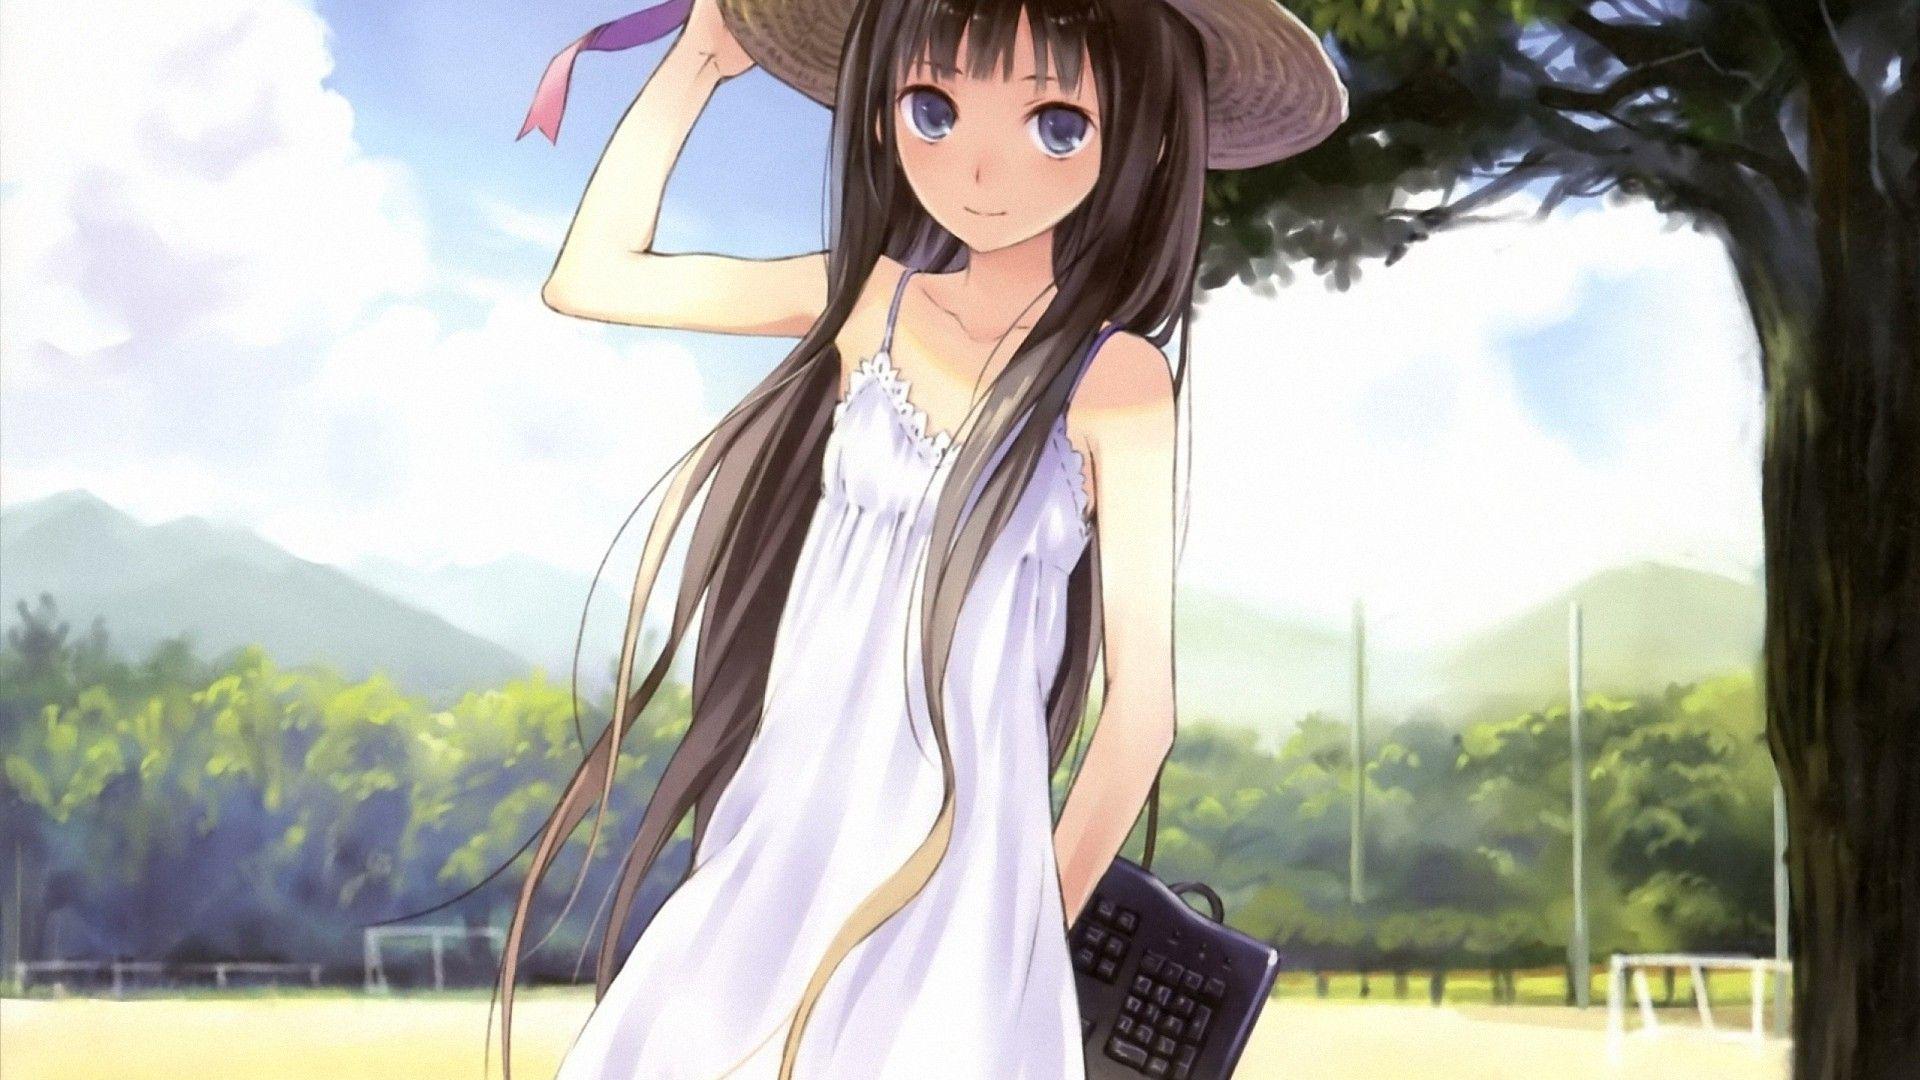 Summer Anime Girl Wallpapers - Top Free Summer Anime Girl ...